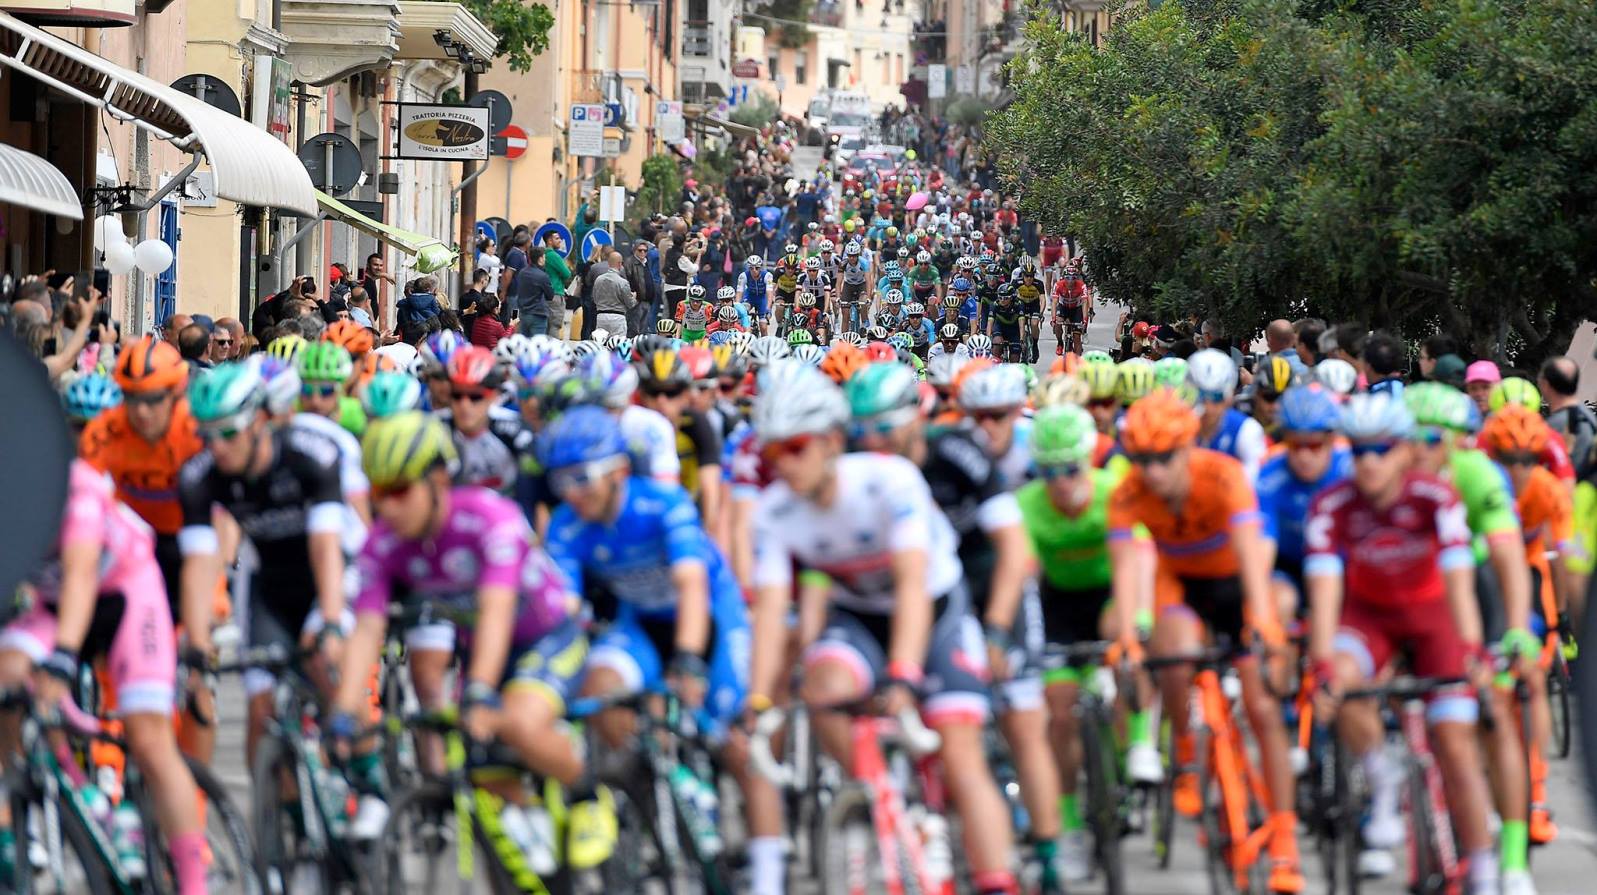 The 2018 Giro d’Italia bike race begins in Israel on May 4. Photo via Giro d’Italia Facebook page